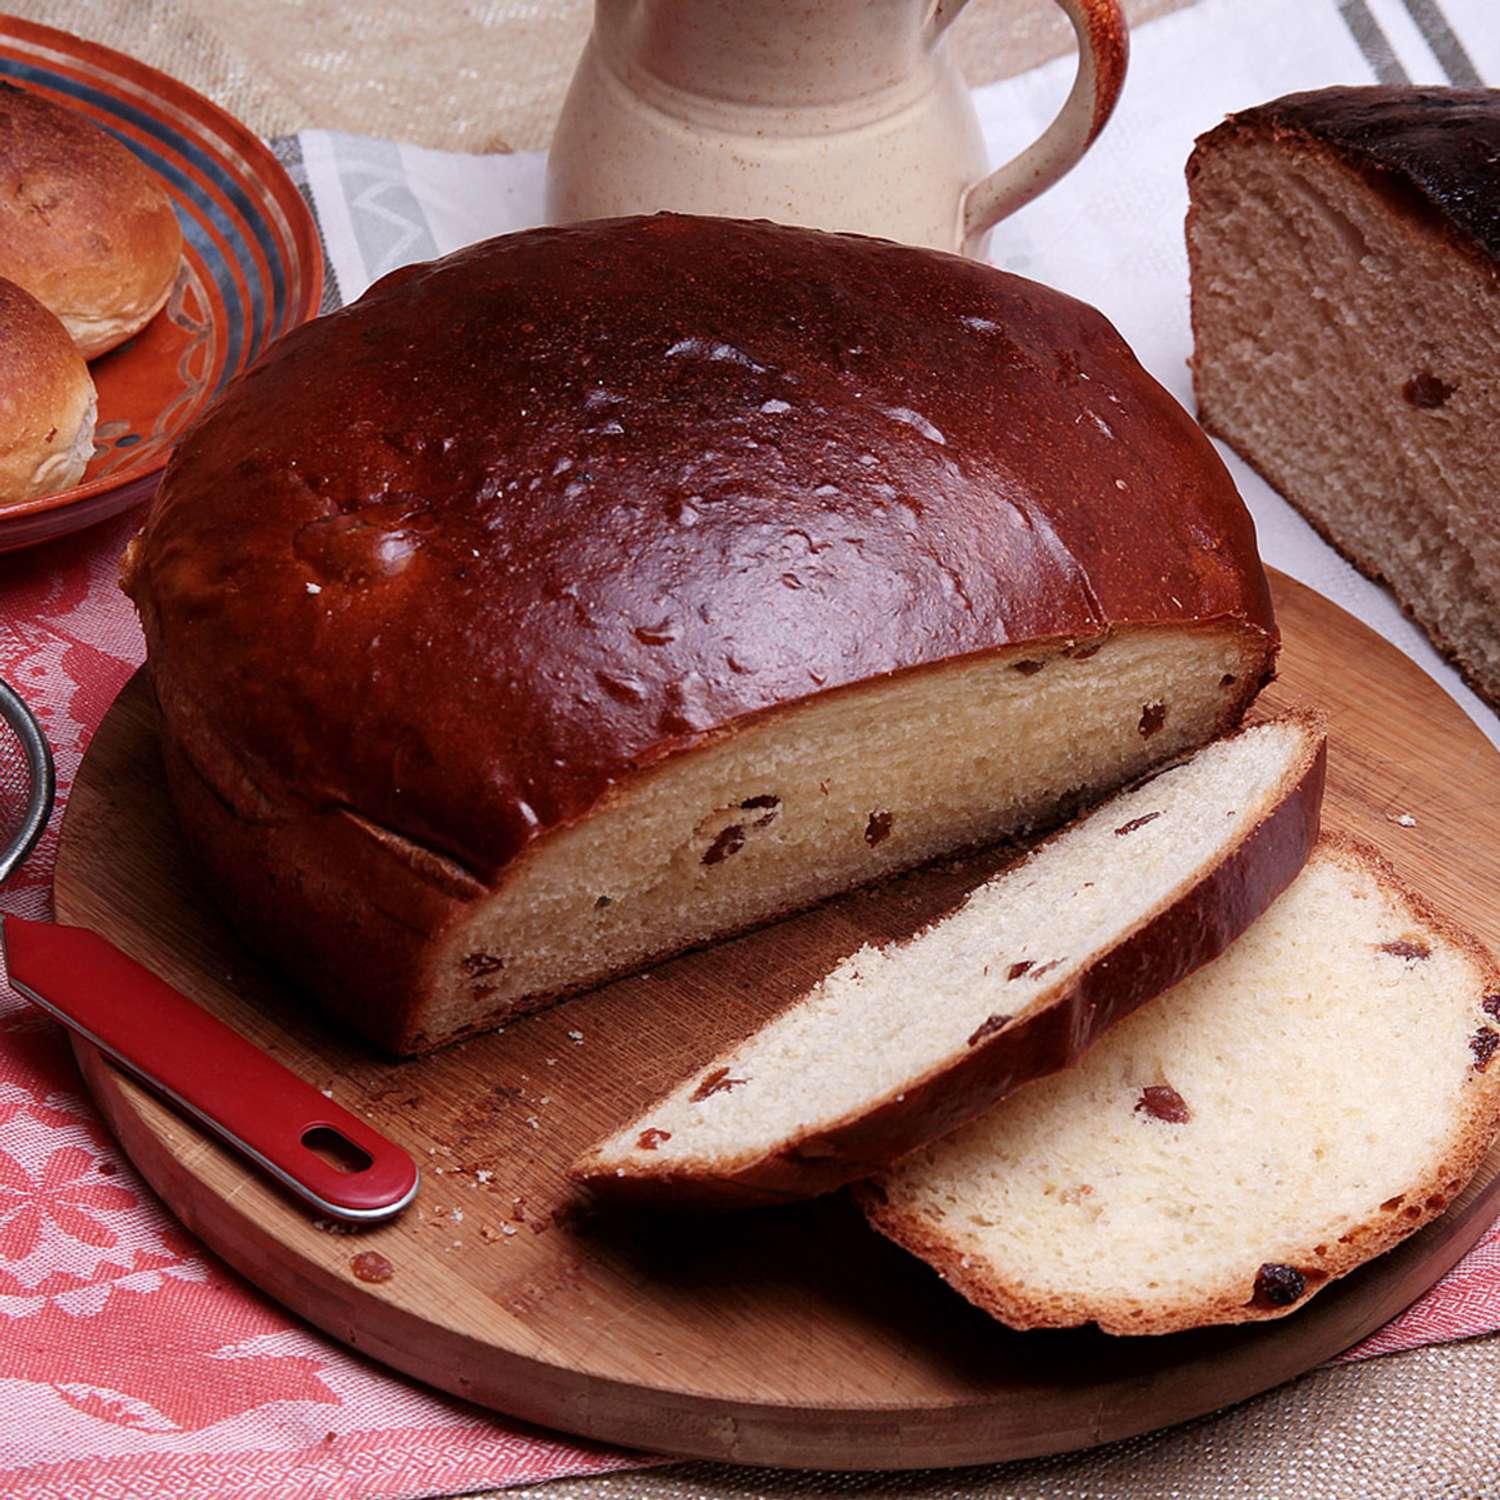 Бабушкин хлеб С. Пудовъ С изюмом и корицей 500 г - фото 3